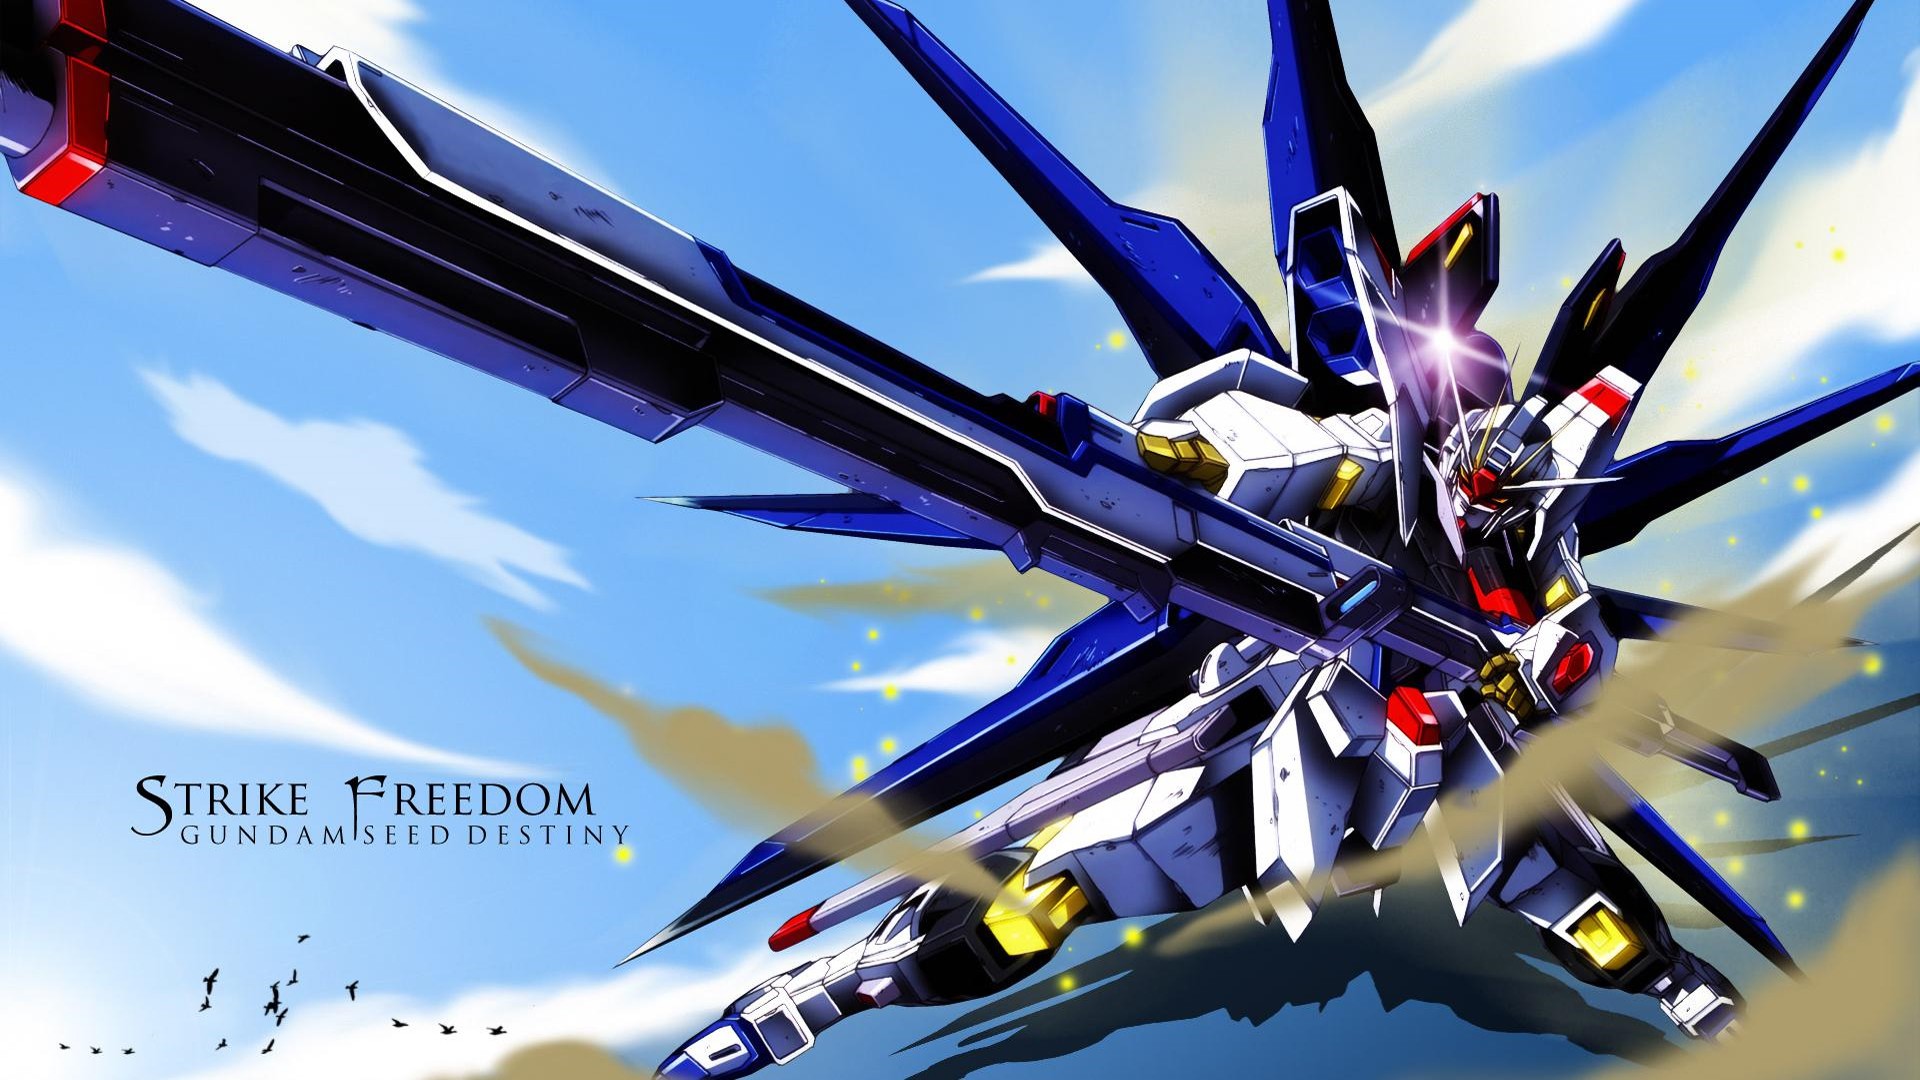 Gundam Mobile Suit Gundam Seed Mobile Suit Gundam Seed Destiny Anime 19x1080 Wallpaper Wallhaven Cc